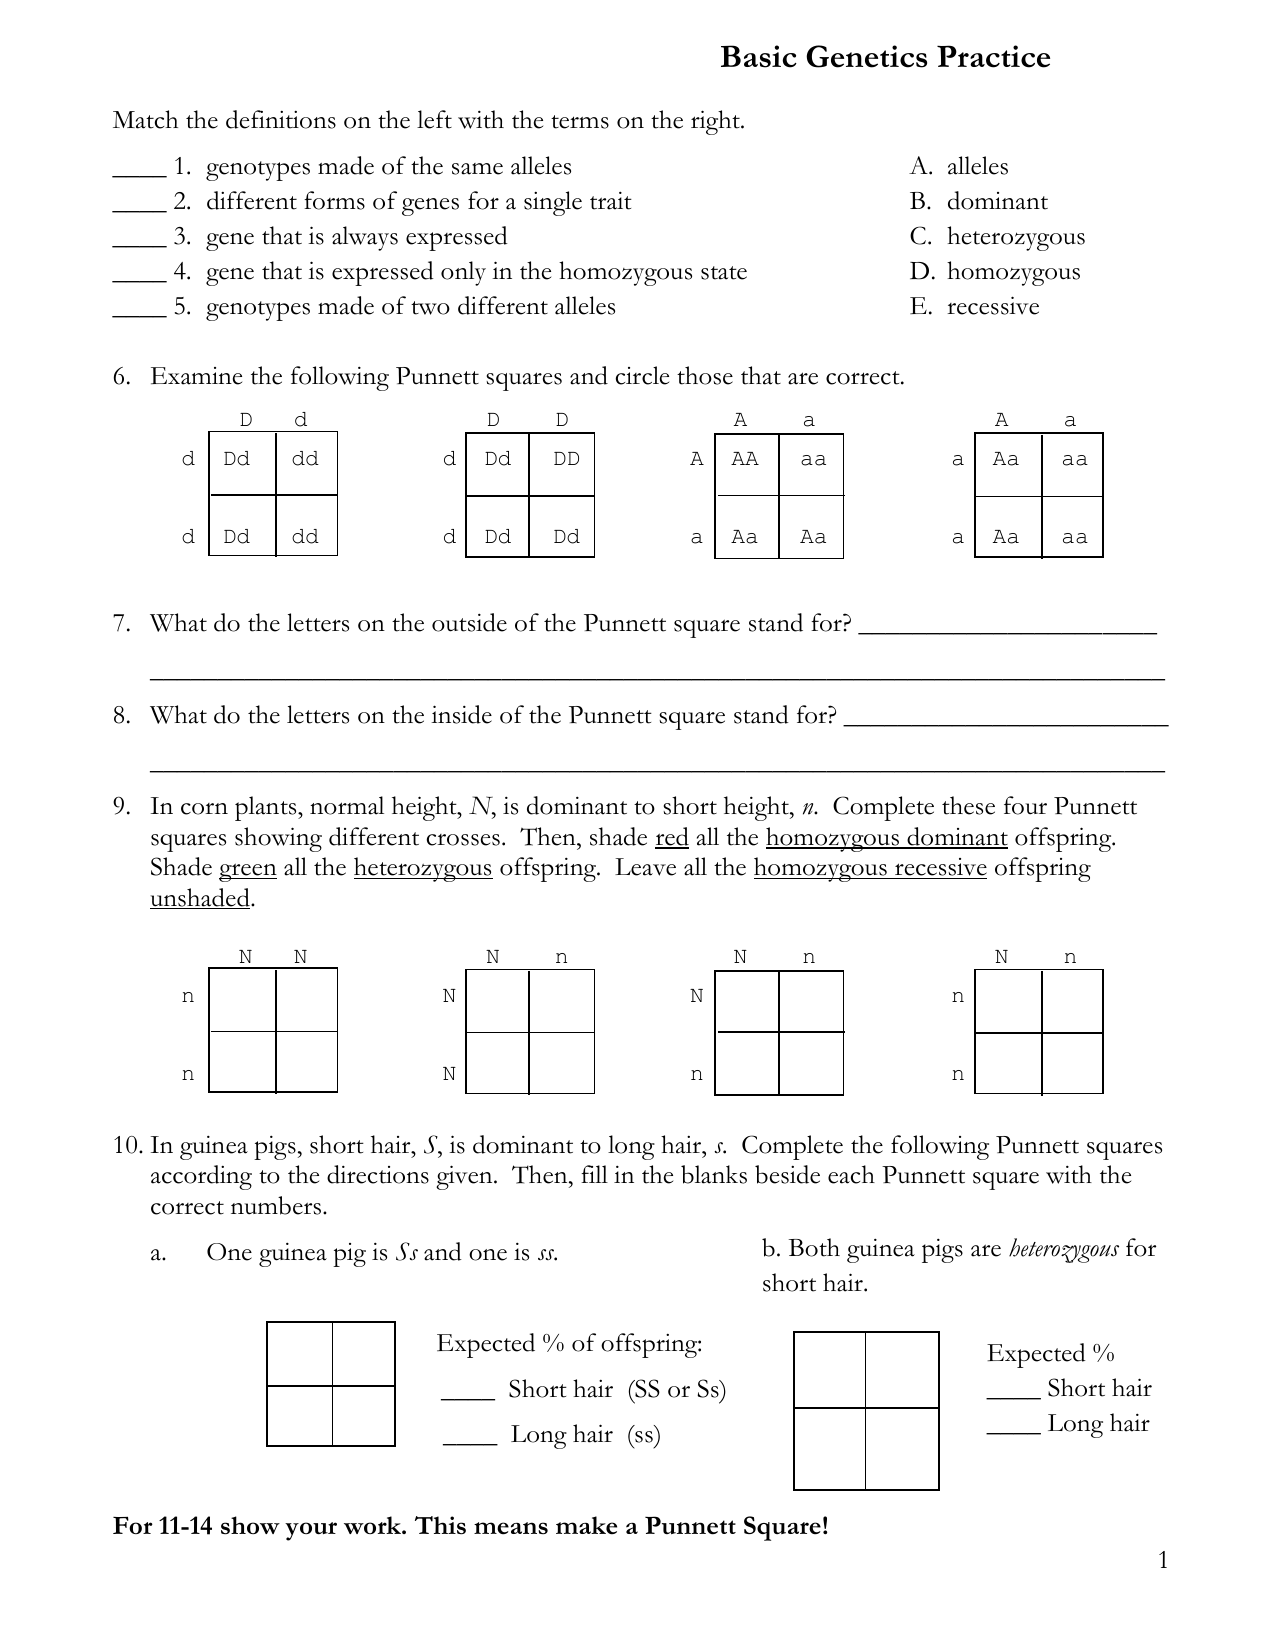 Monohybrid Cross Problems In Monohybrid Cross Practice Problems Worksheet